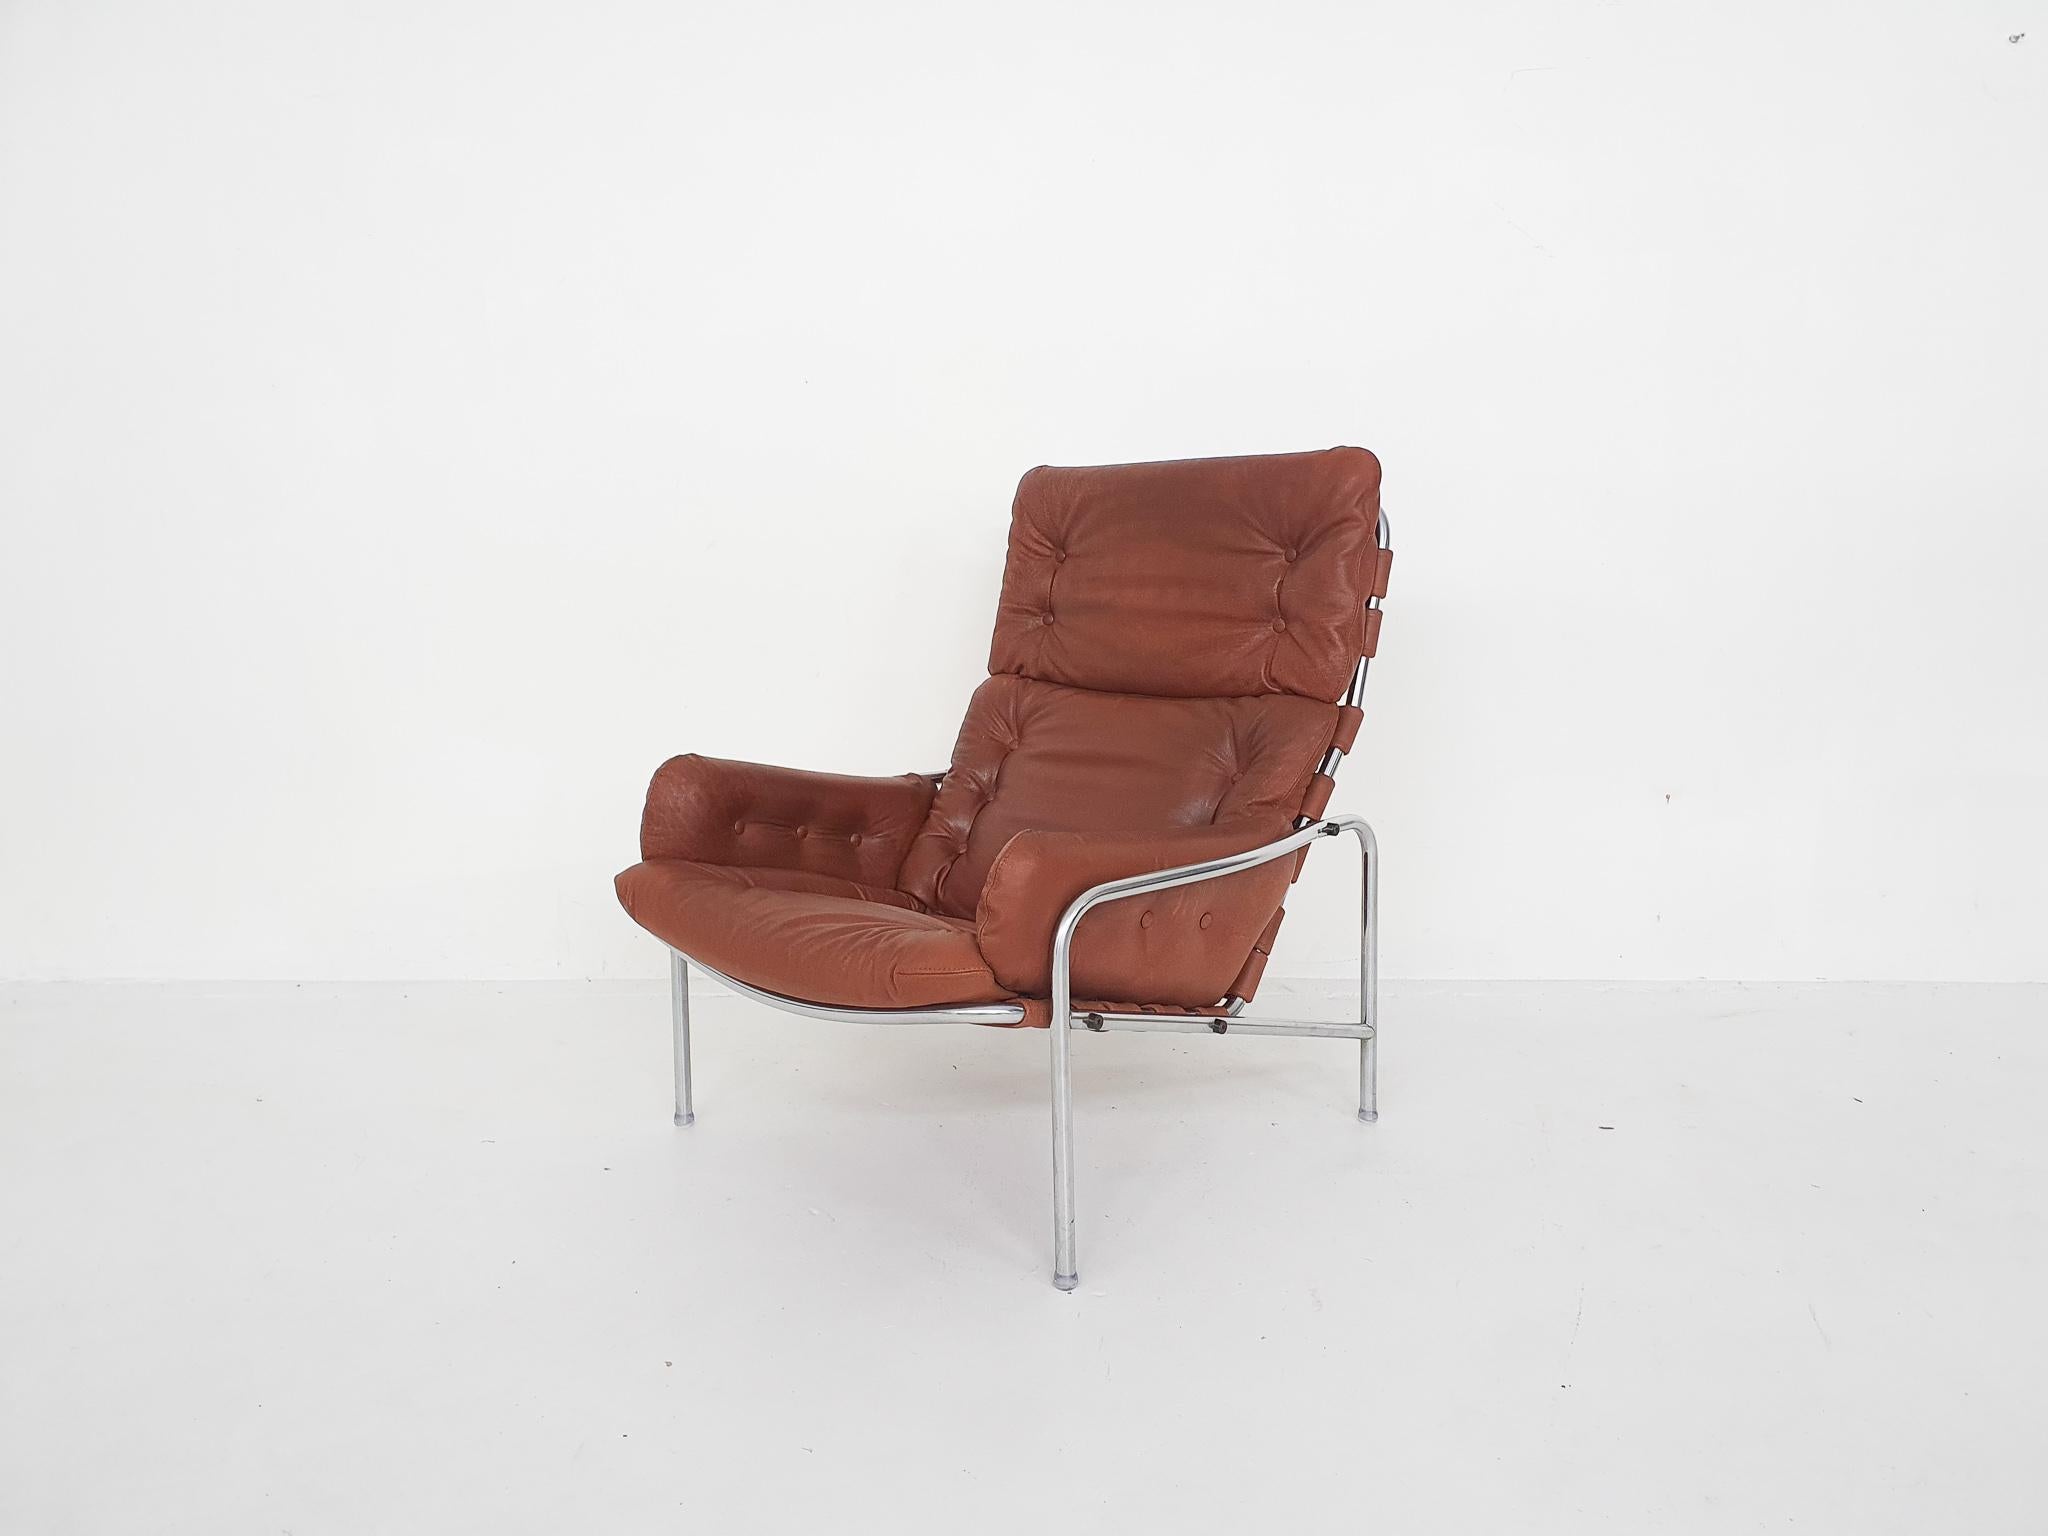 Mid-Century Modern “Nagoya” Leather Lounge Chair by Martin Visser for ’t Spectrum, 1969